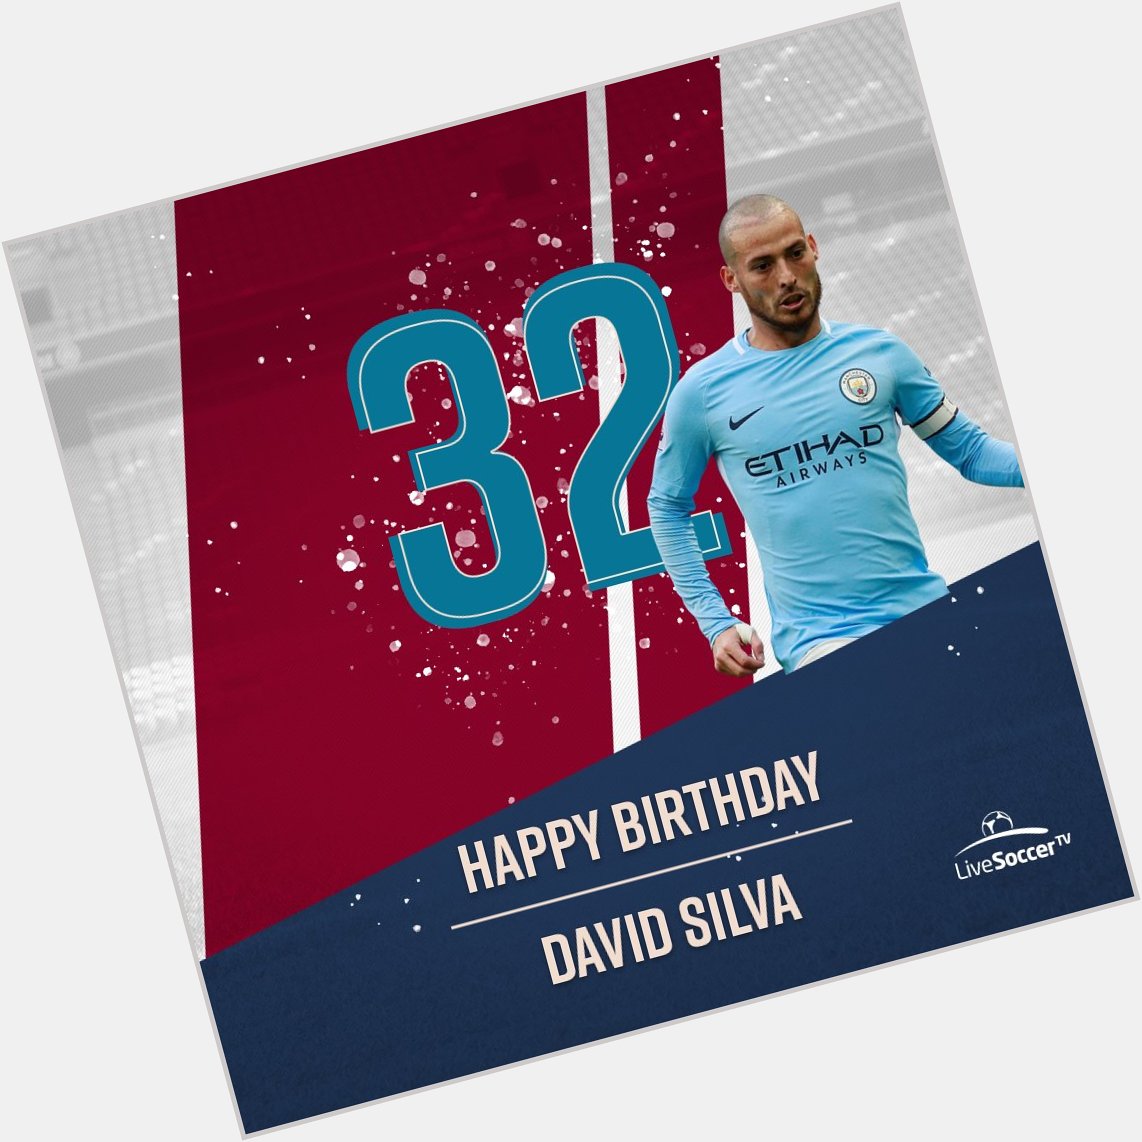 Happy birthday, David Silva  The maestro turns 32! 